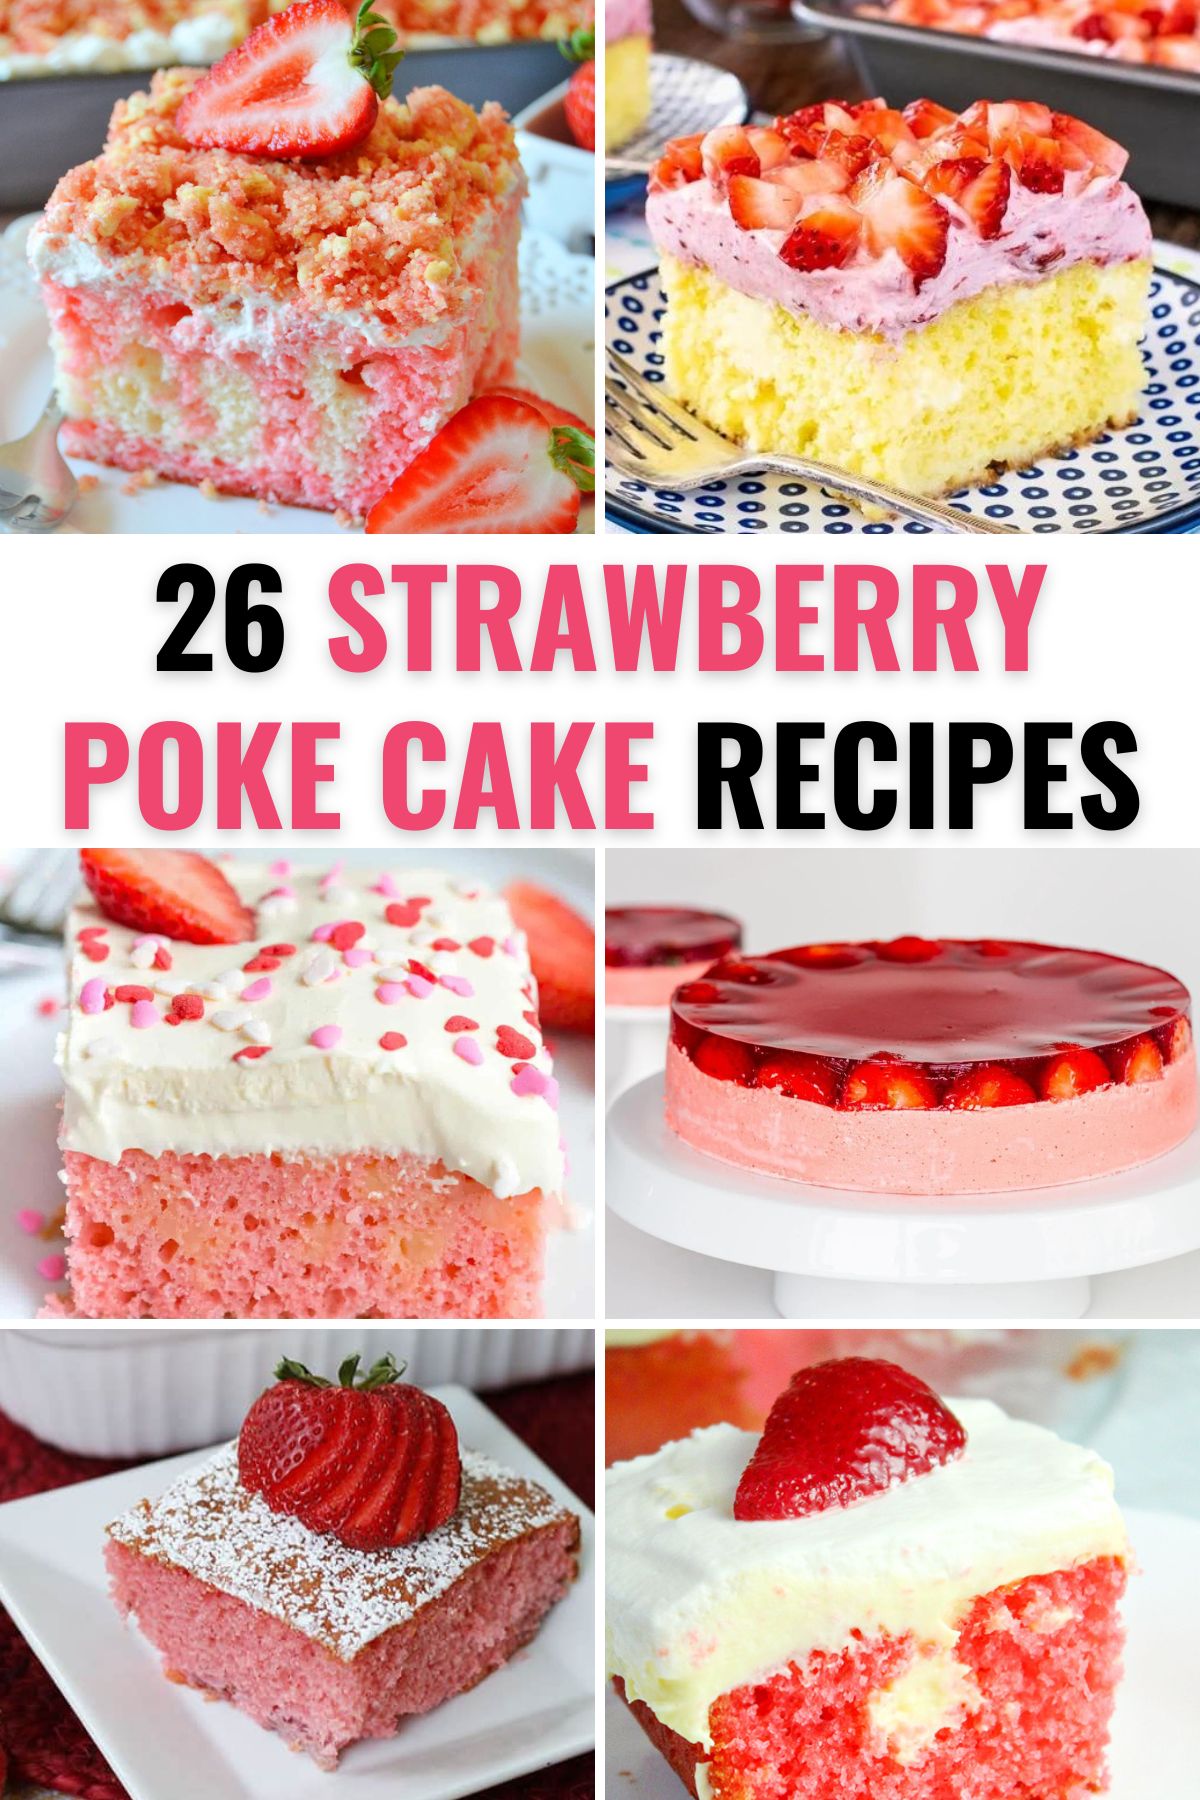 Various strawberry poke cake desserts